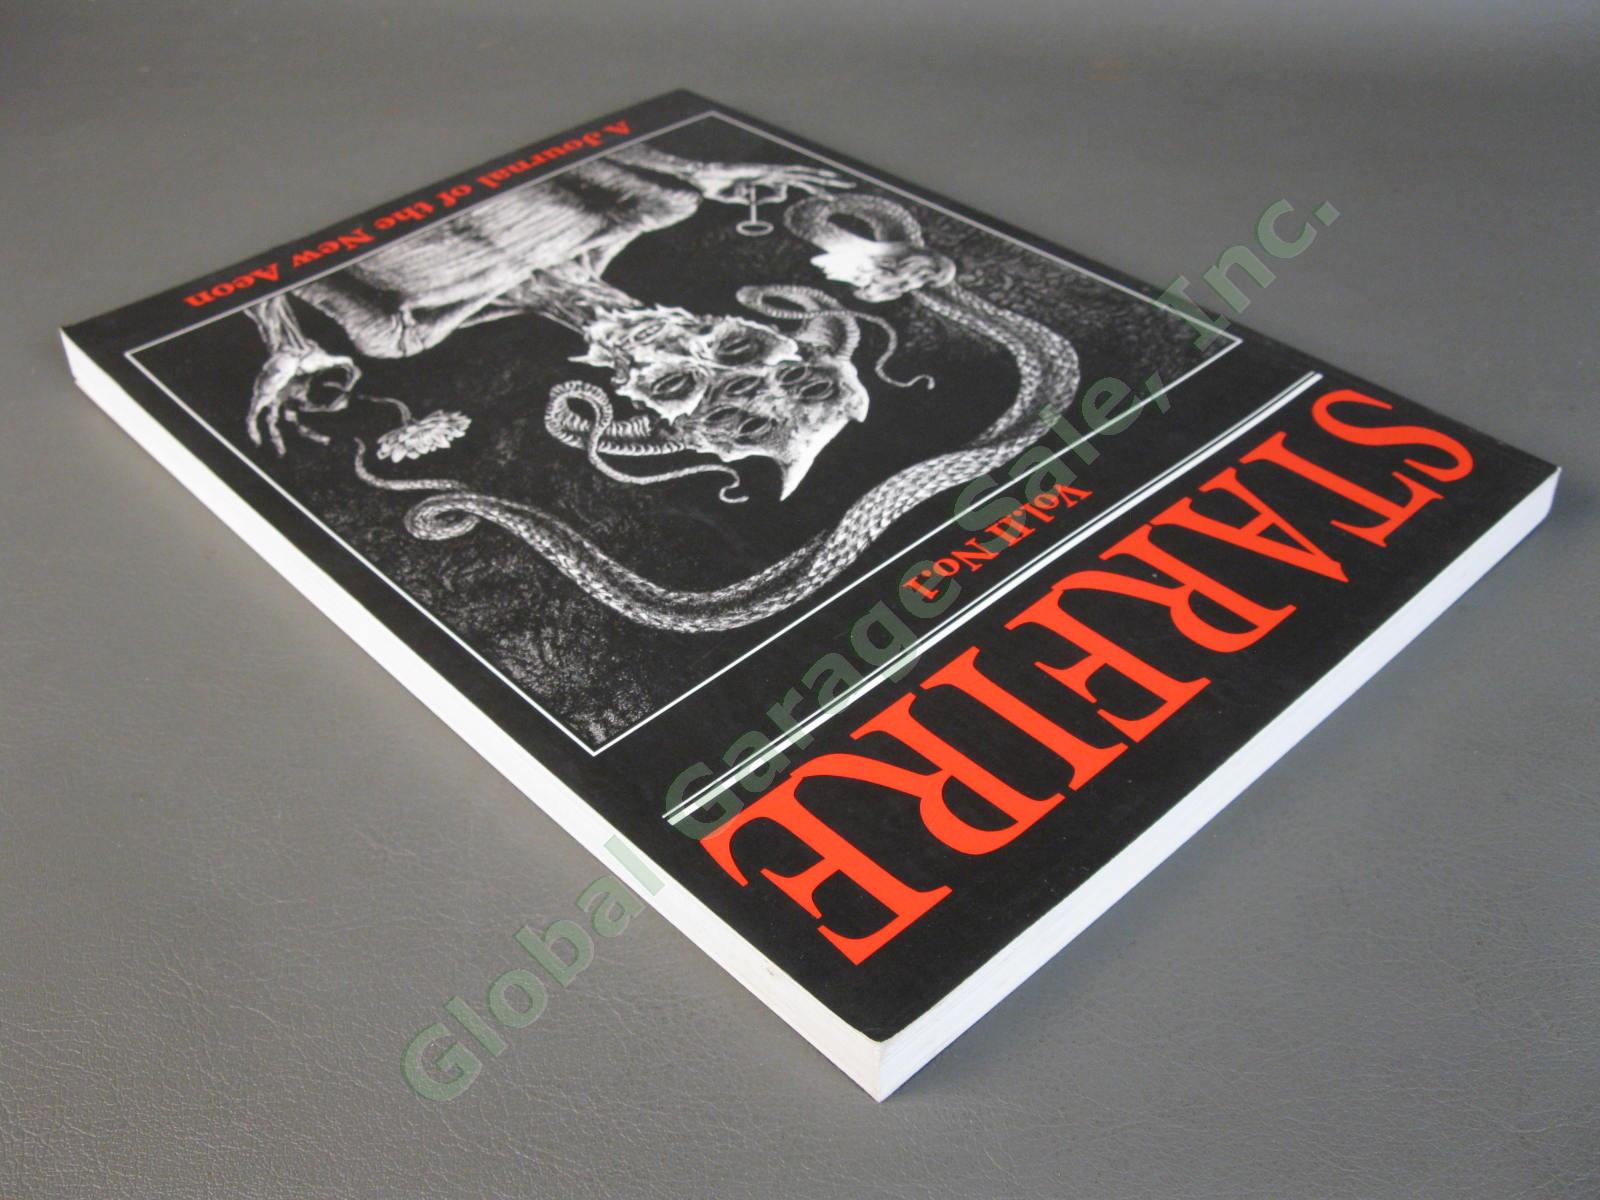 Starfire A Journal of the New Aeon Vol II No 1 OTO Grant Crowley Magick Occult 3